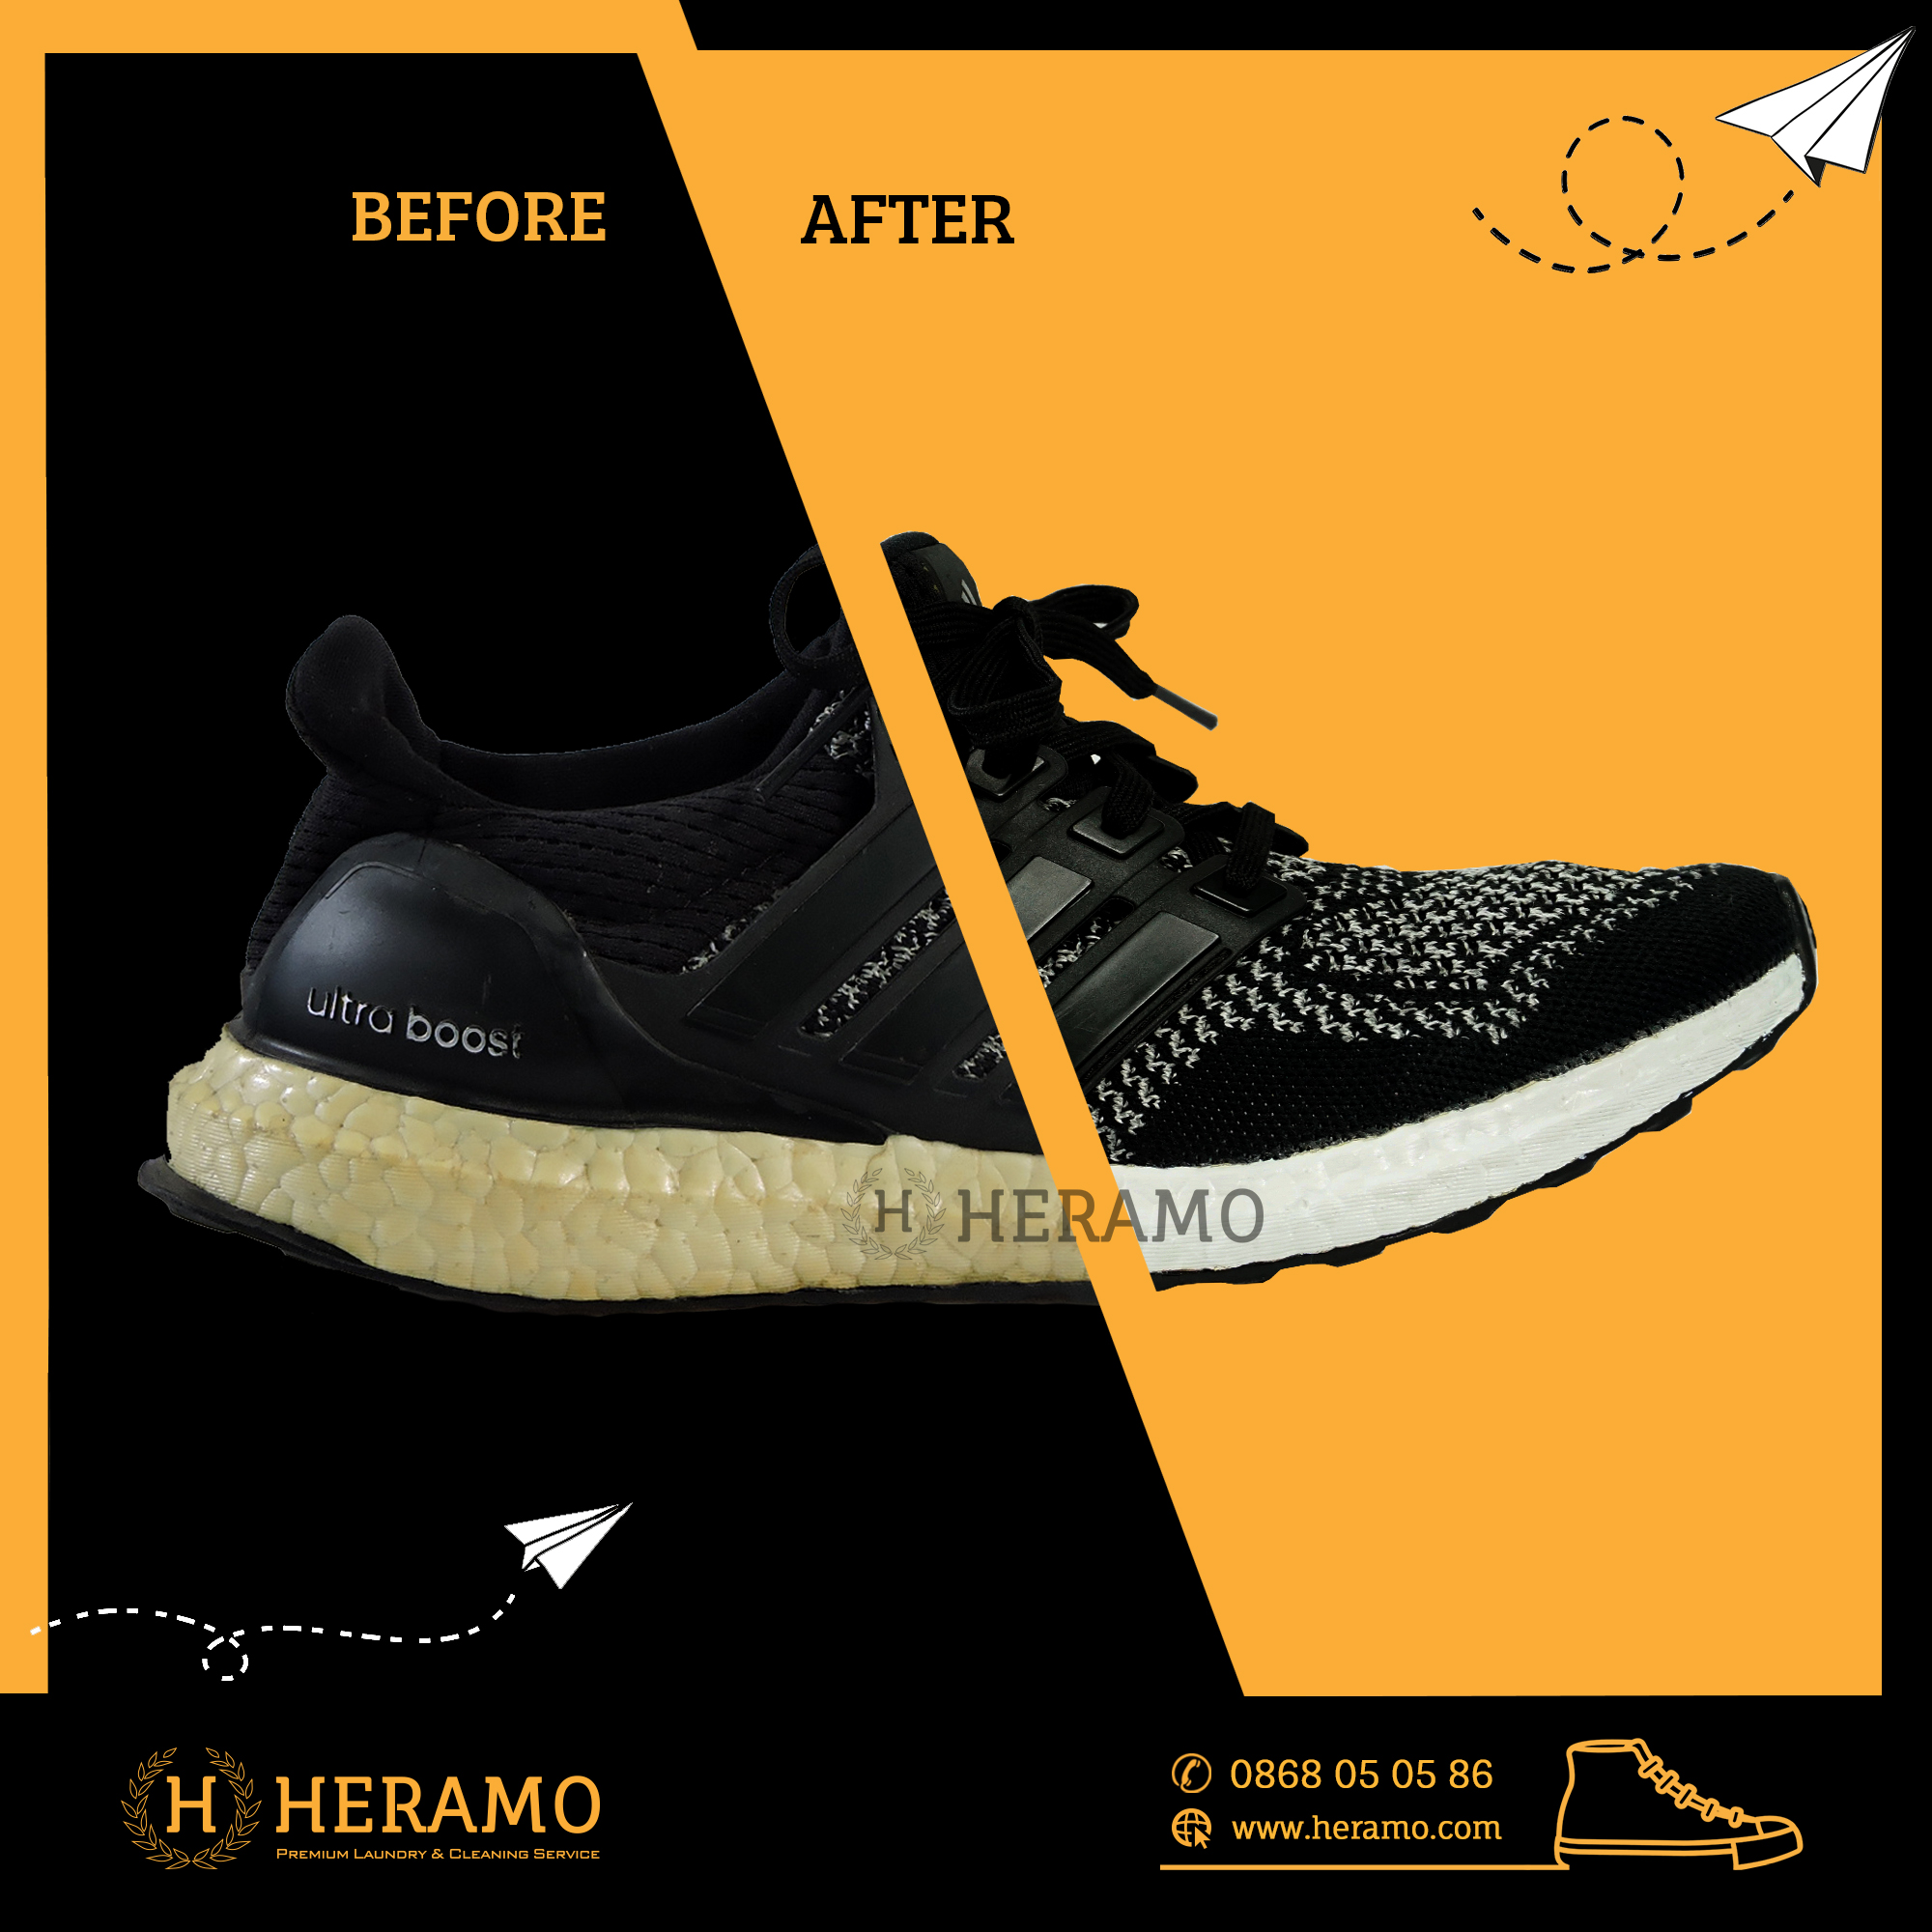 heramo.com - repaint giày tphcm